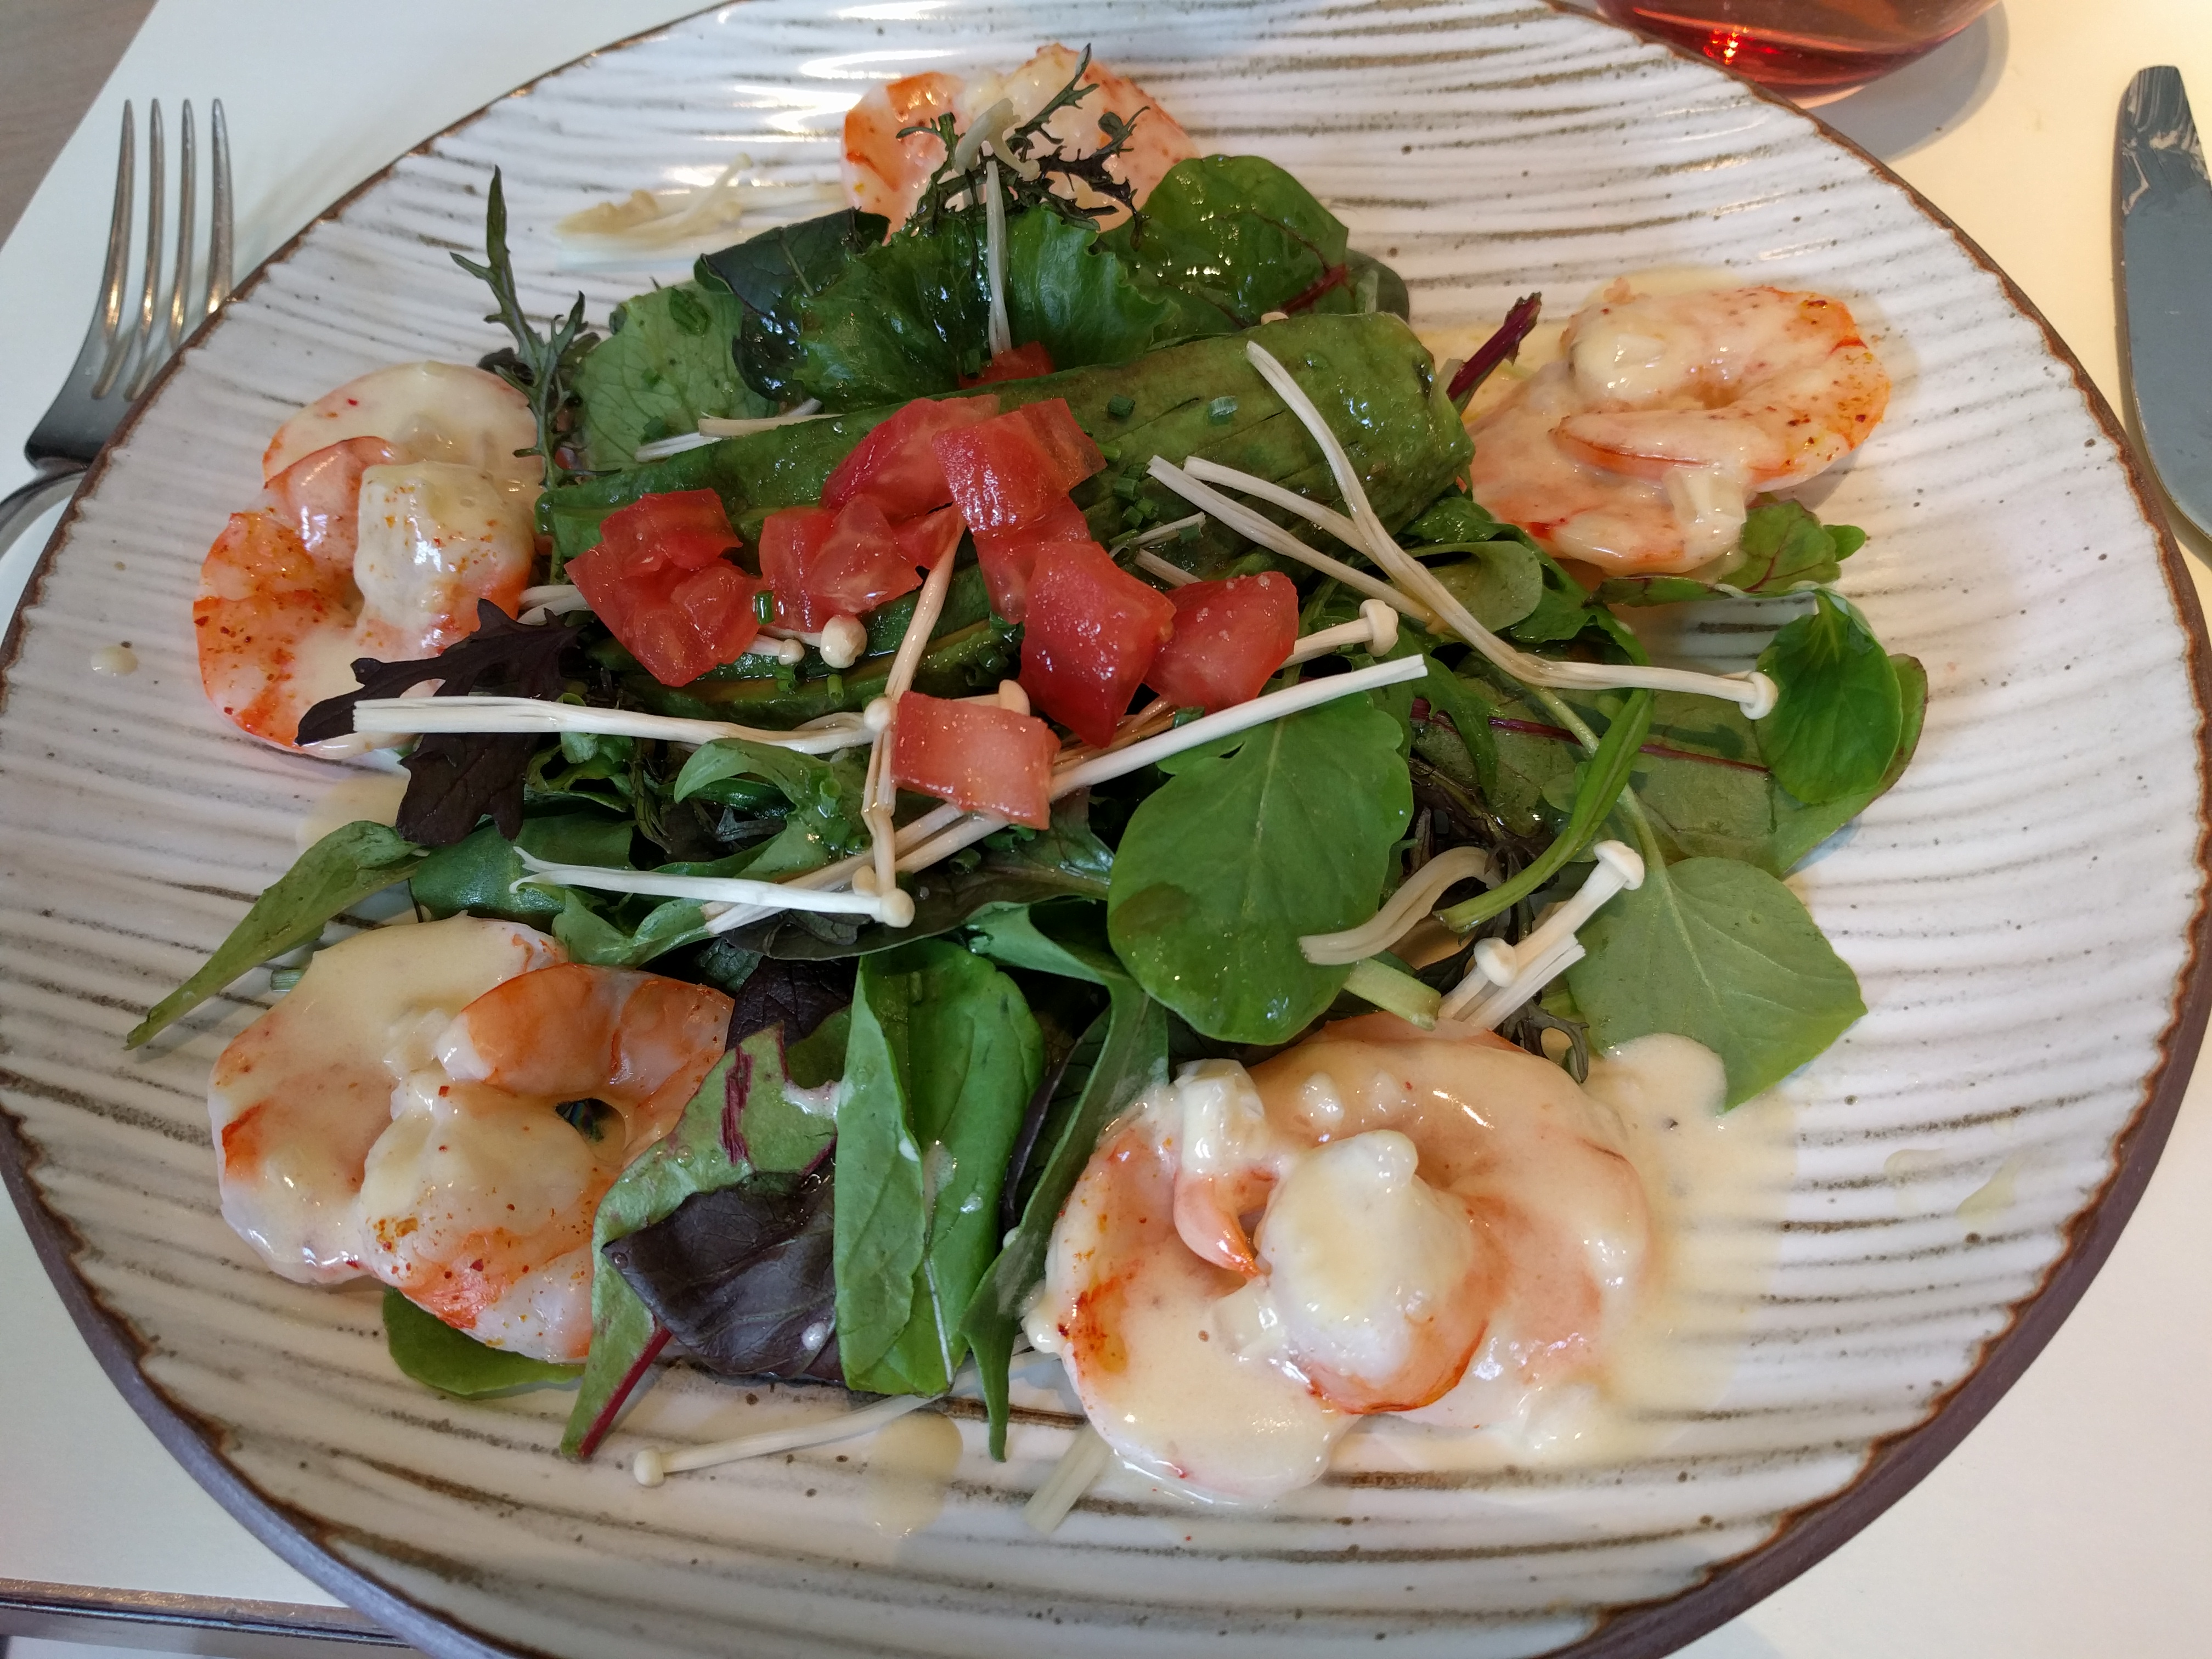 My shrimp salad